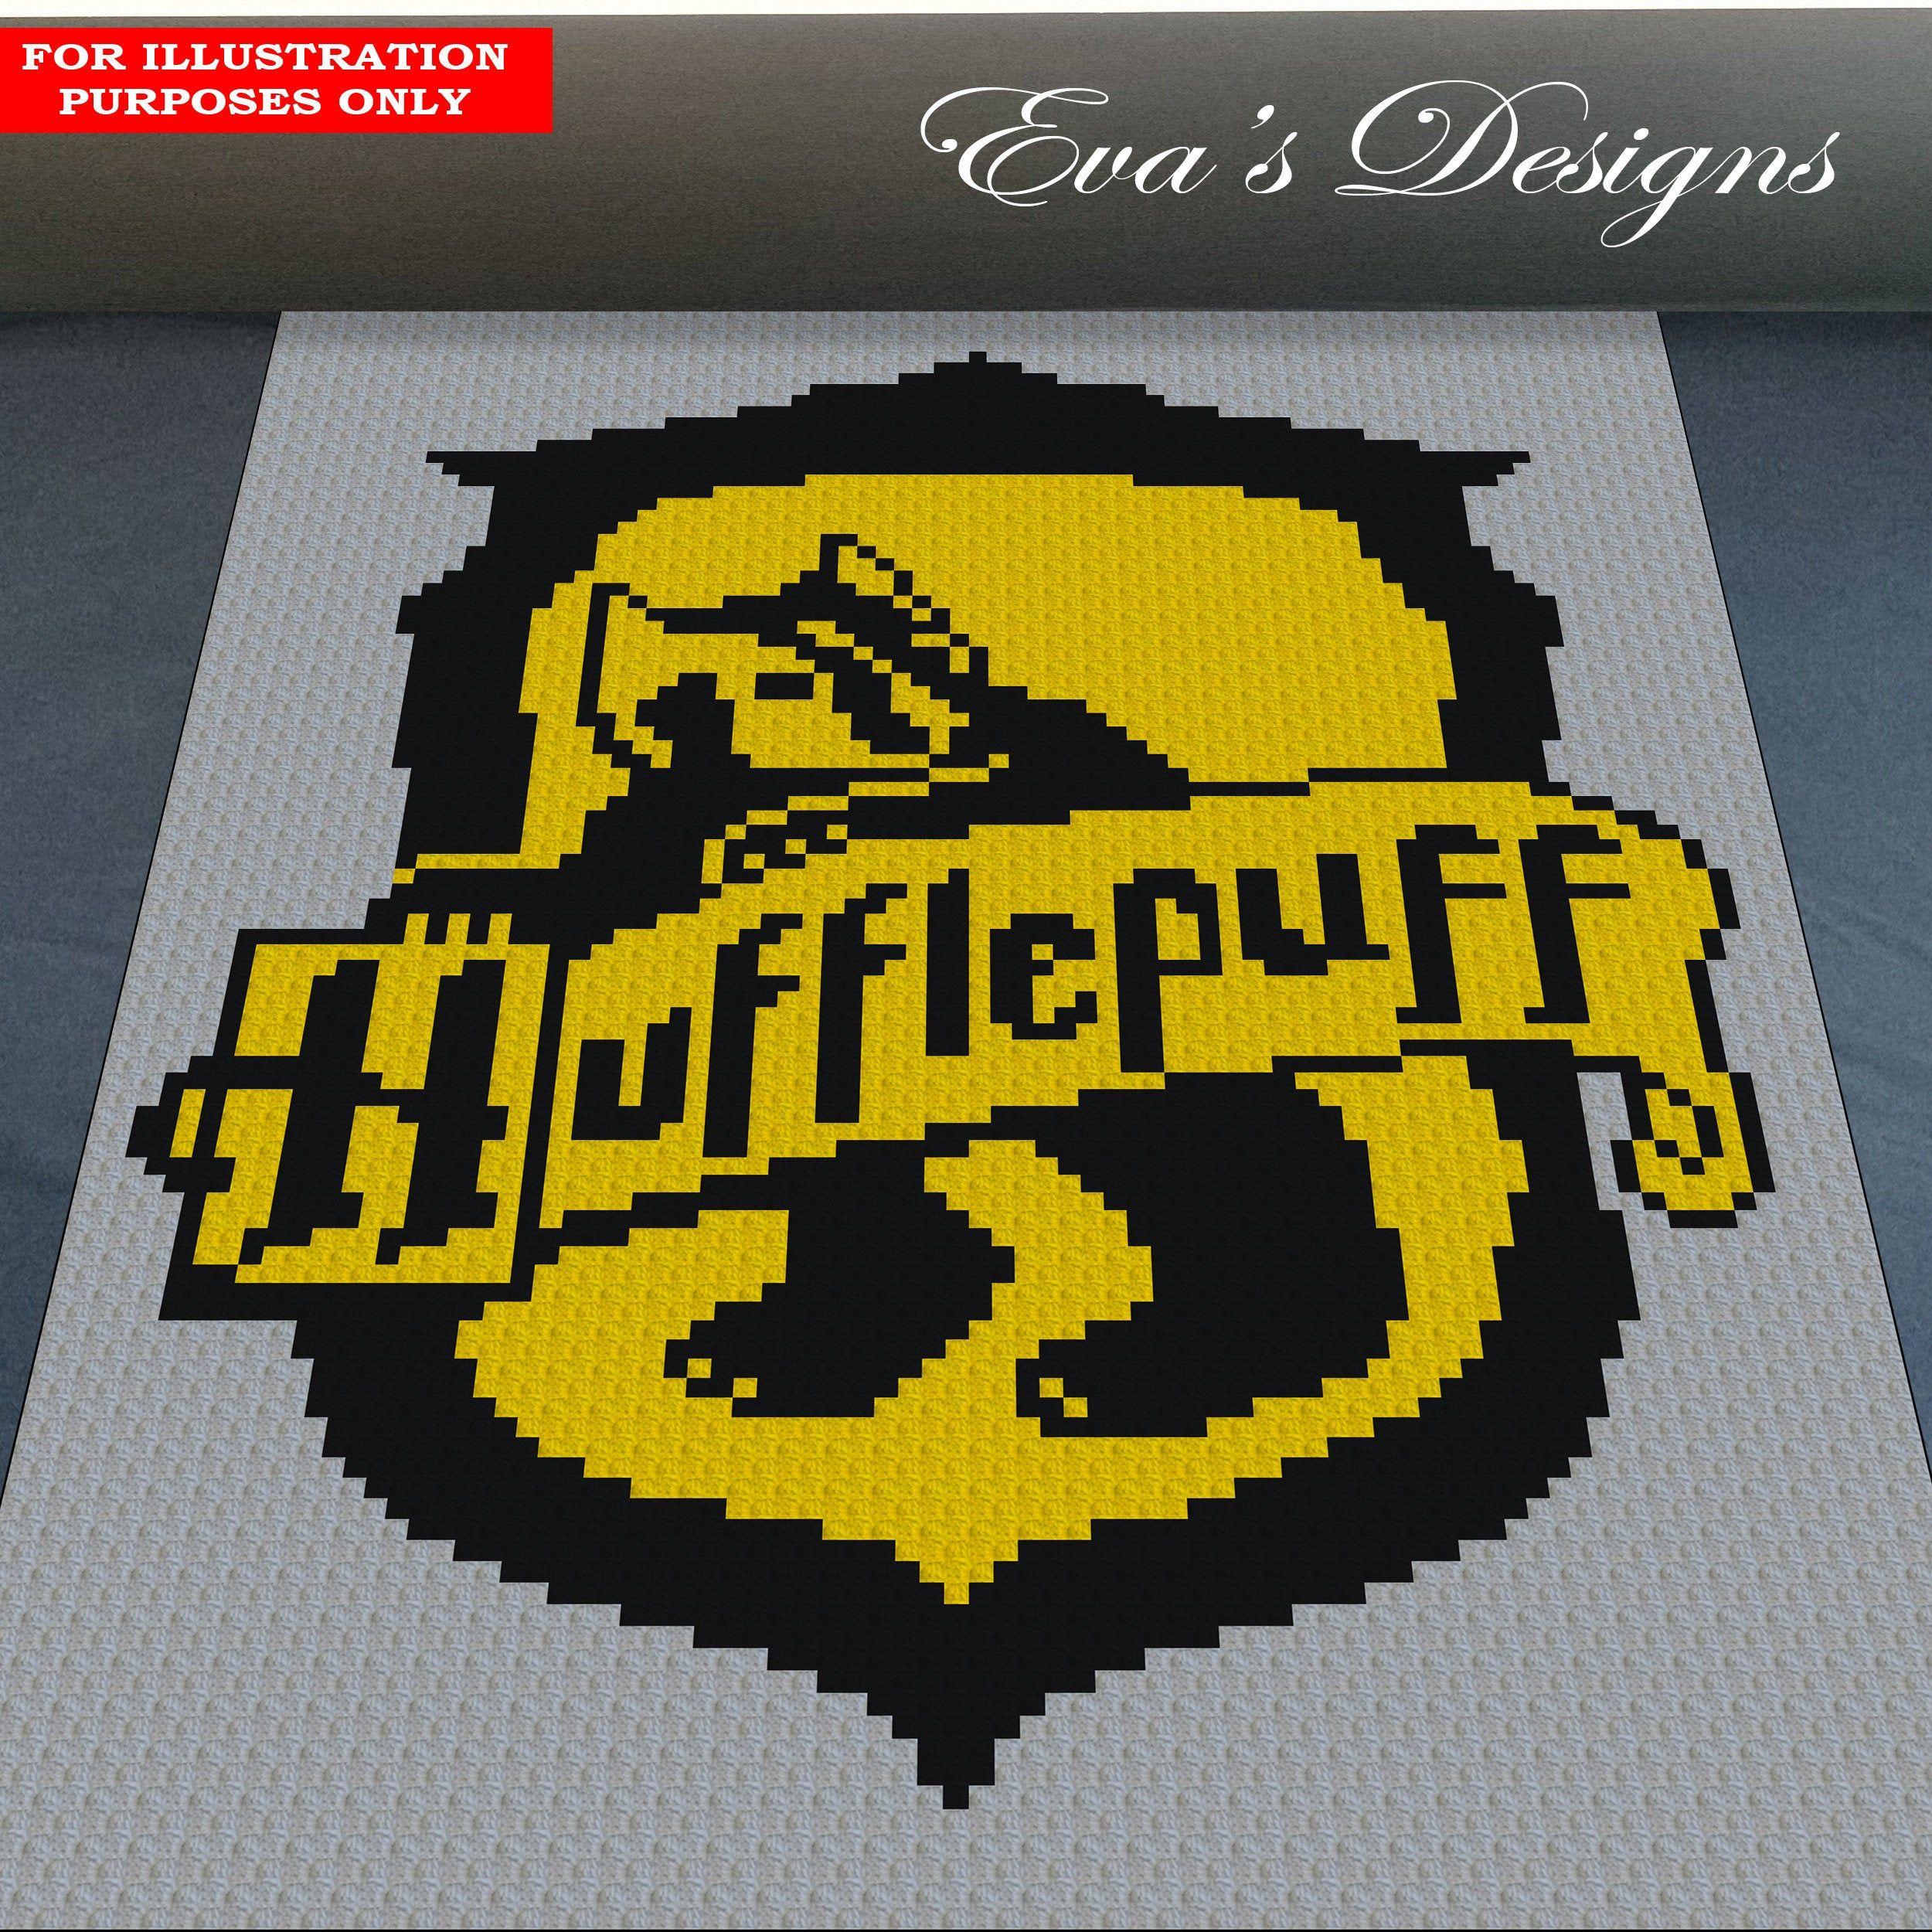 Hufflepuff Logo - Eva's Designs: HUFFLEPUFF LOGO - crochet blanket pattern; c2c, knitting;  pdf download